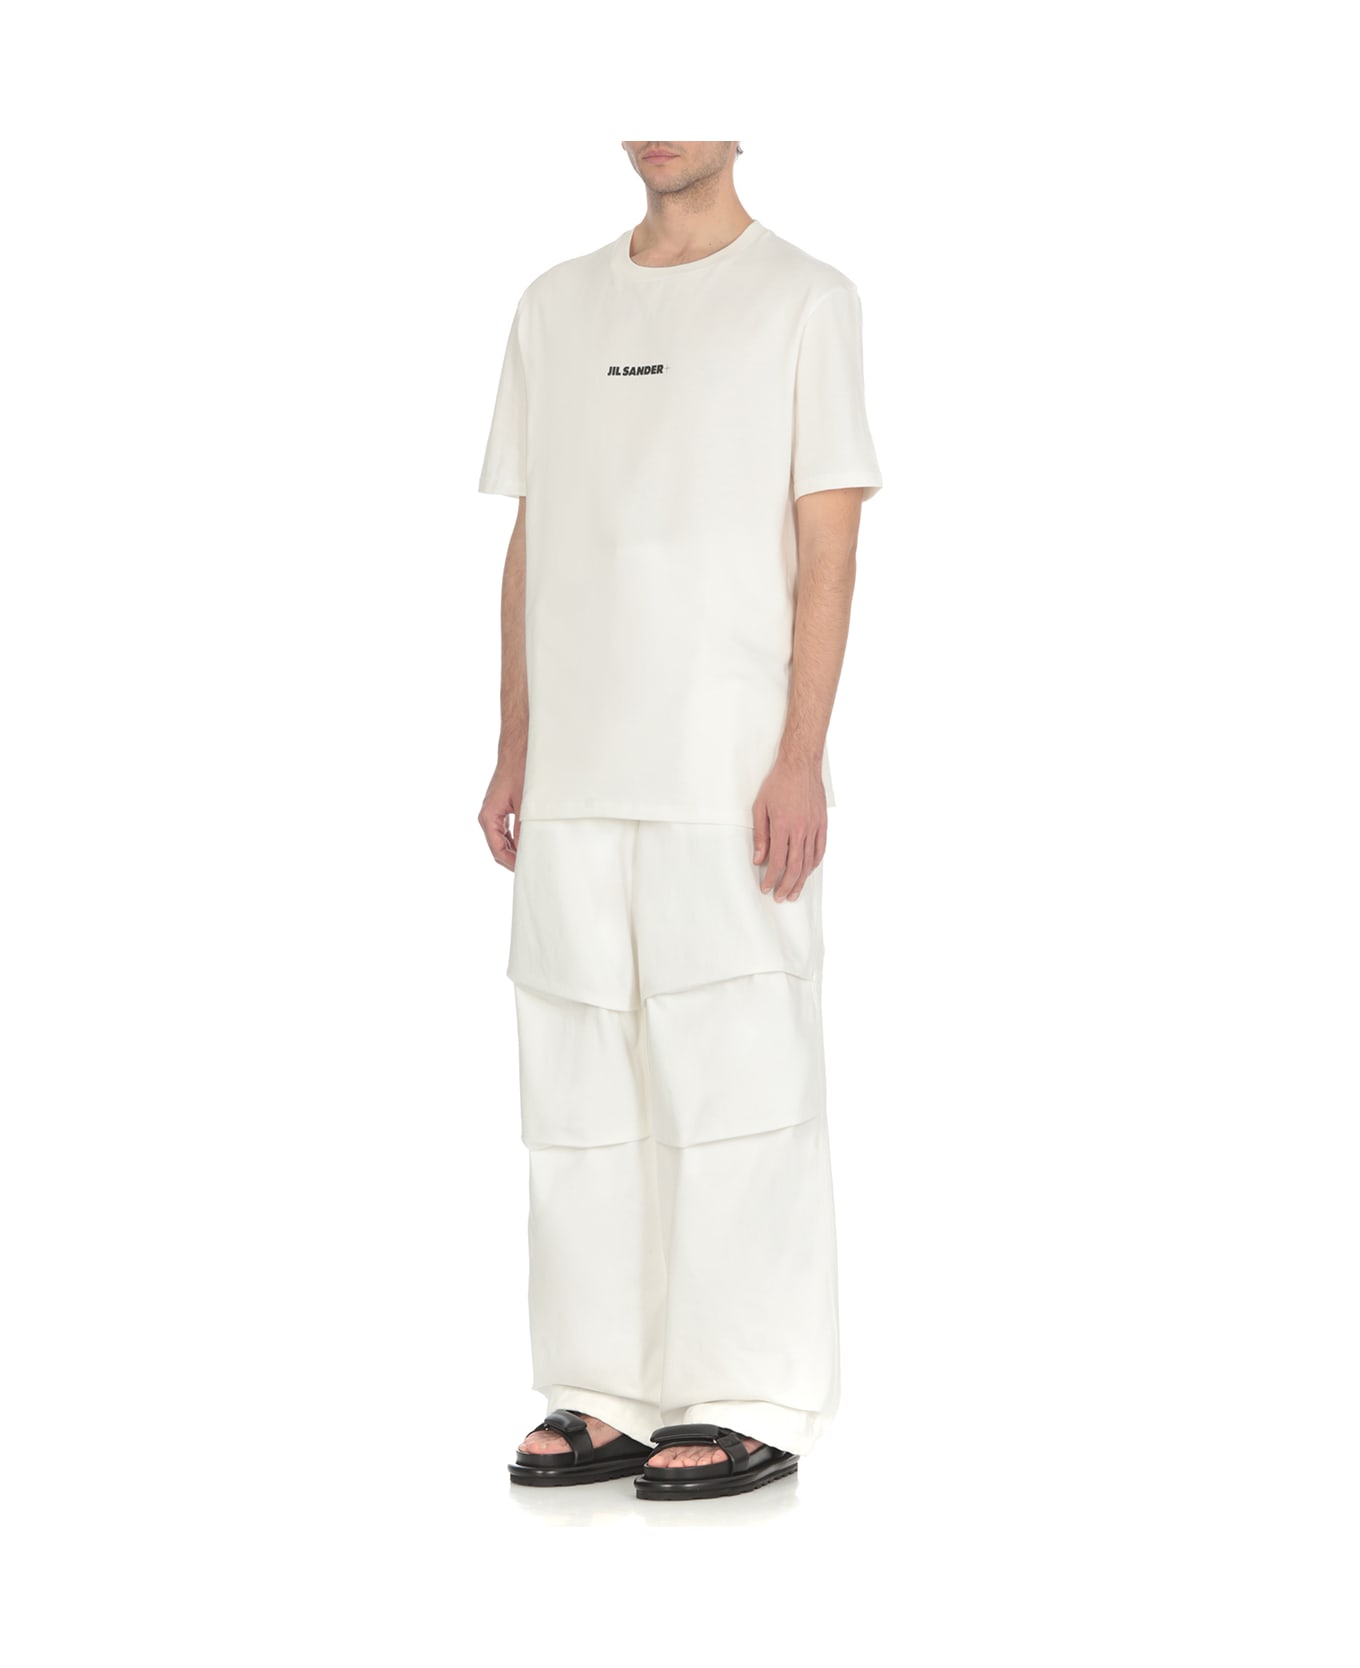 Jil Sander T-shirt With Logo - White